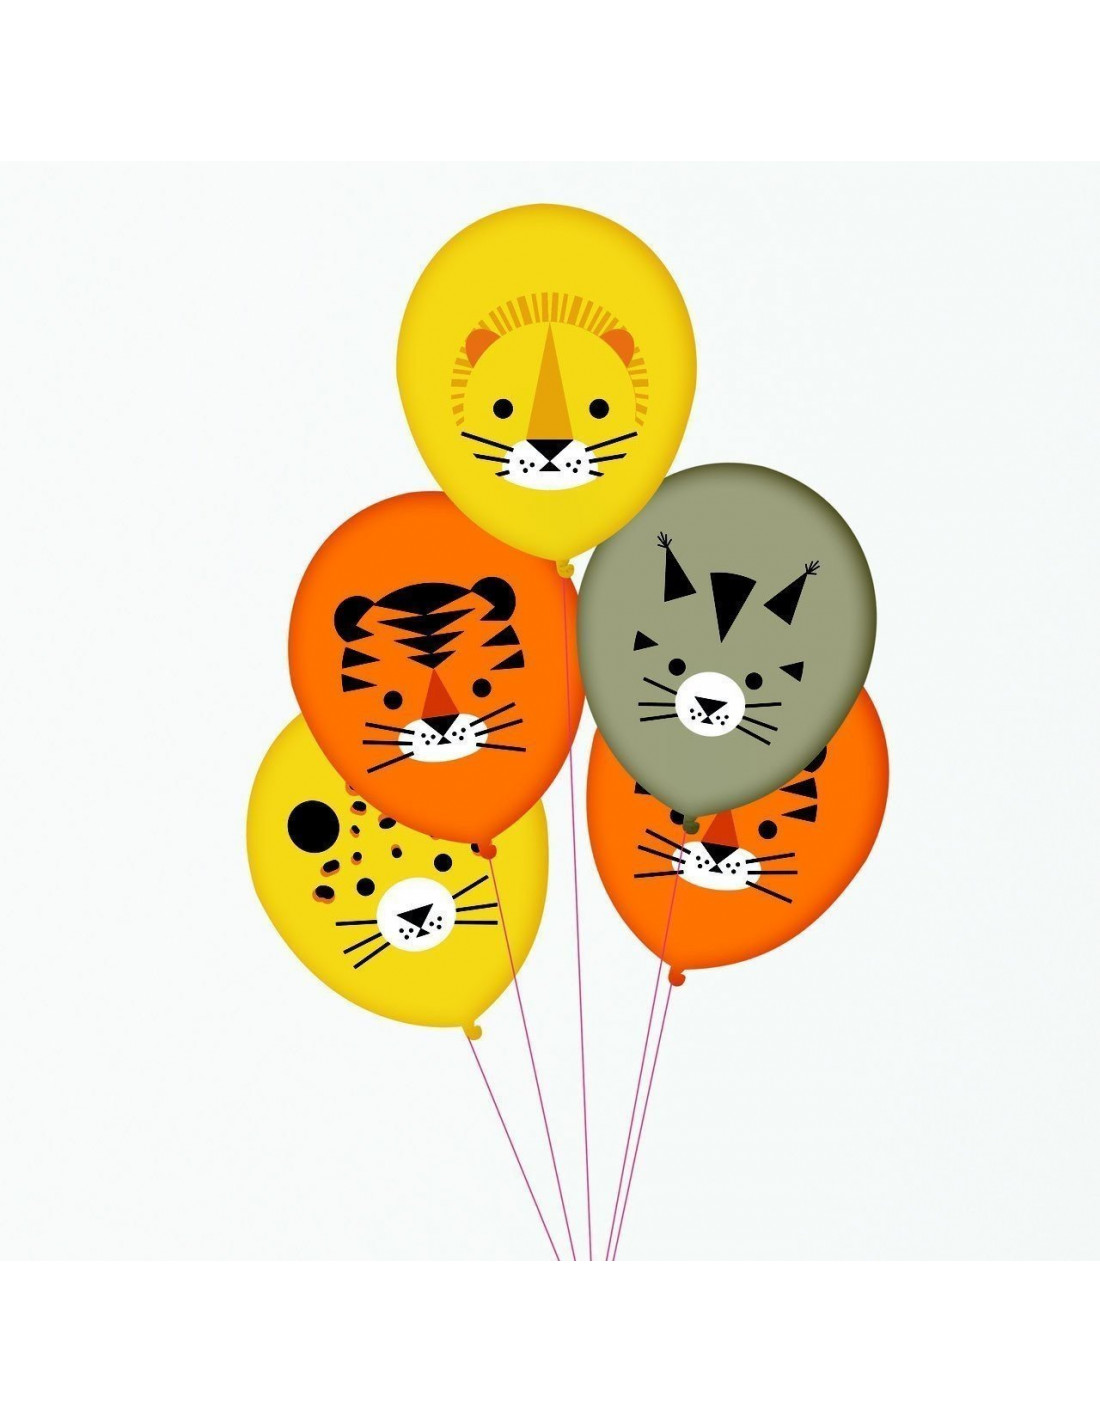 5 Ballons Animaux Safari My Little Day - Les Bambetises